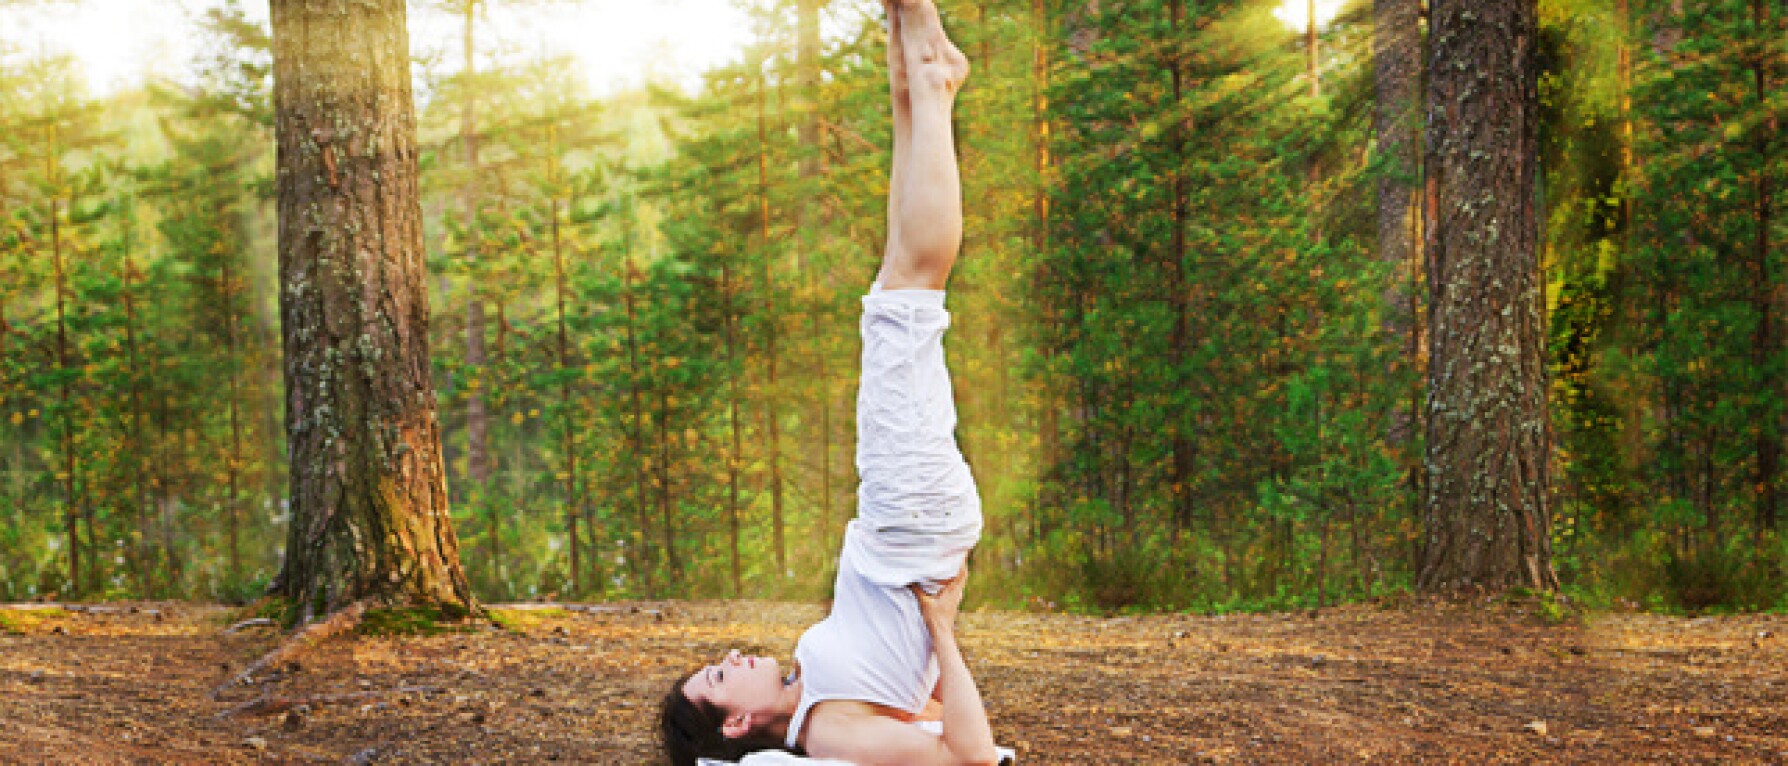 30 Min Chakra Yoga Flow: Cleanse Your Solar Plexus Chakra - Allie Van Fossen